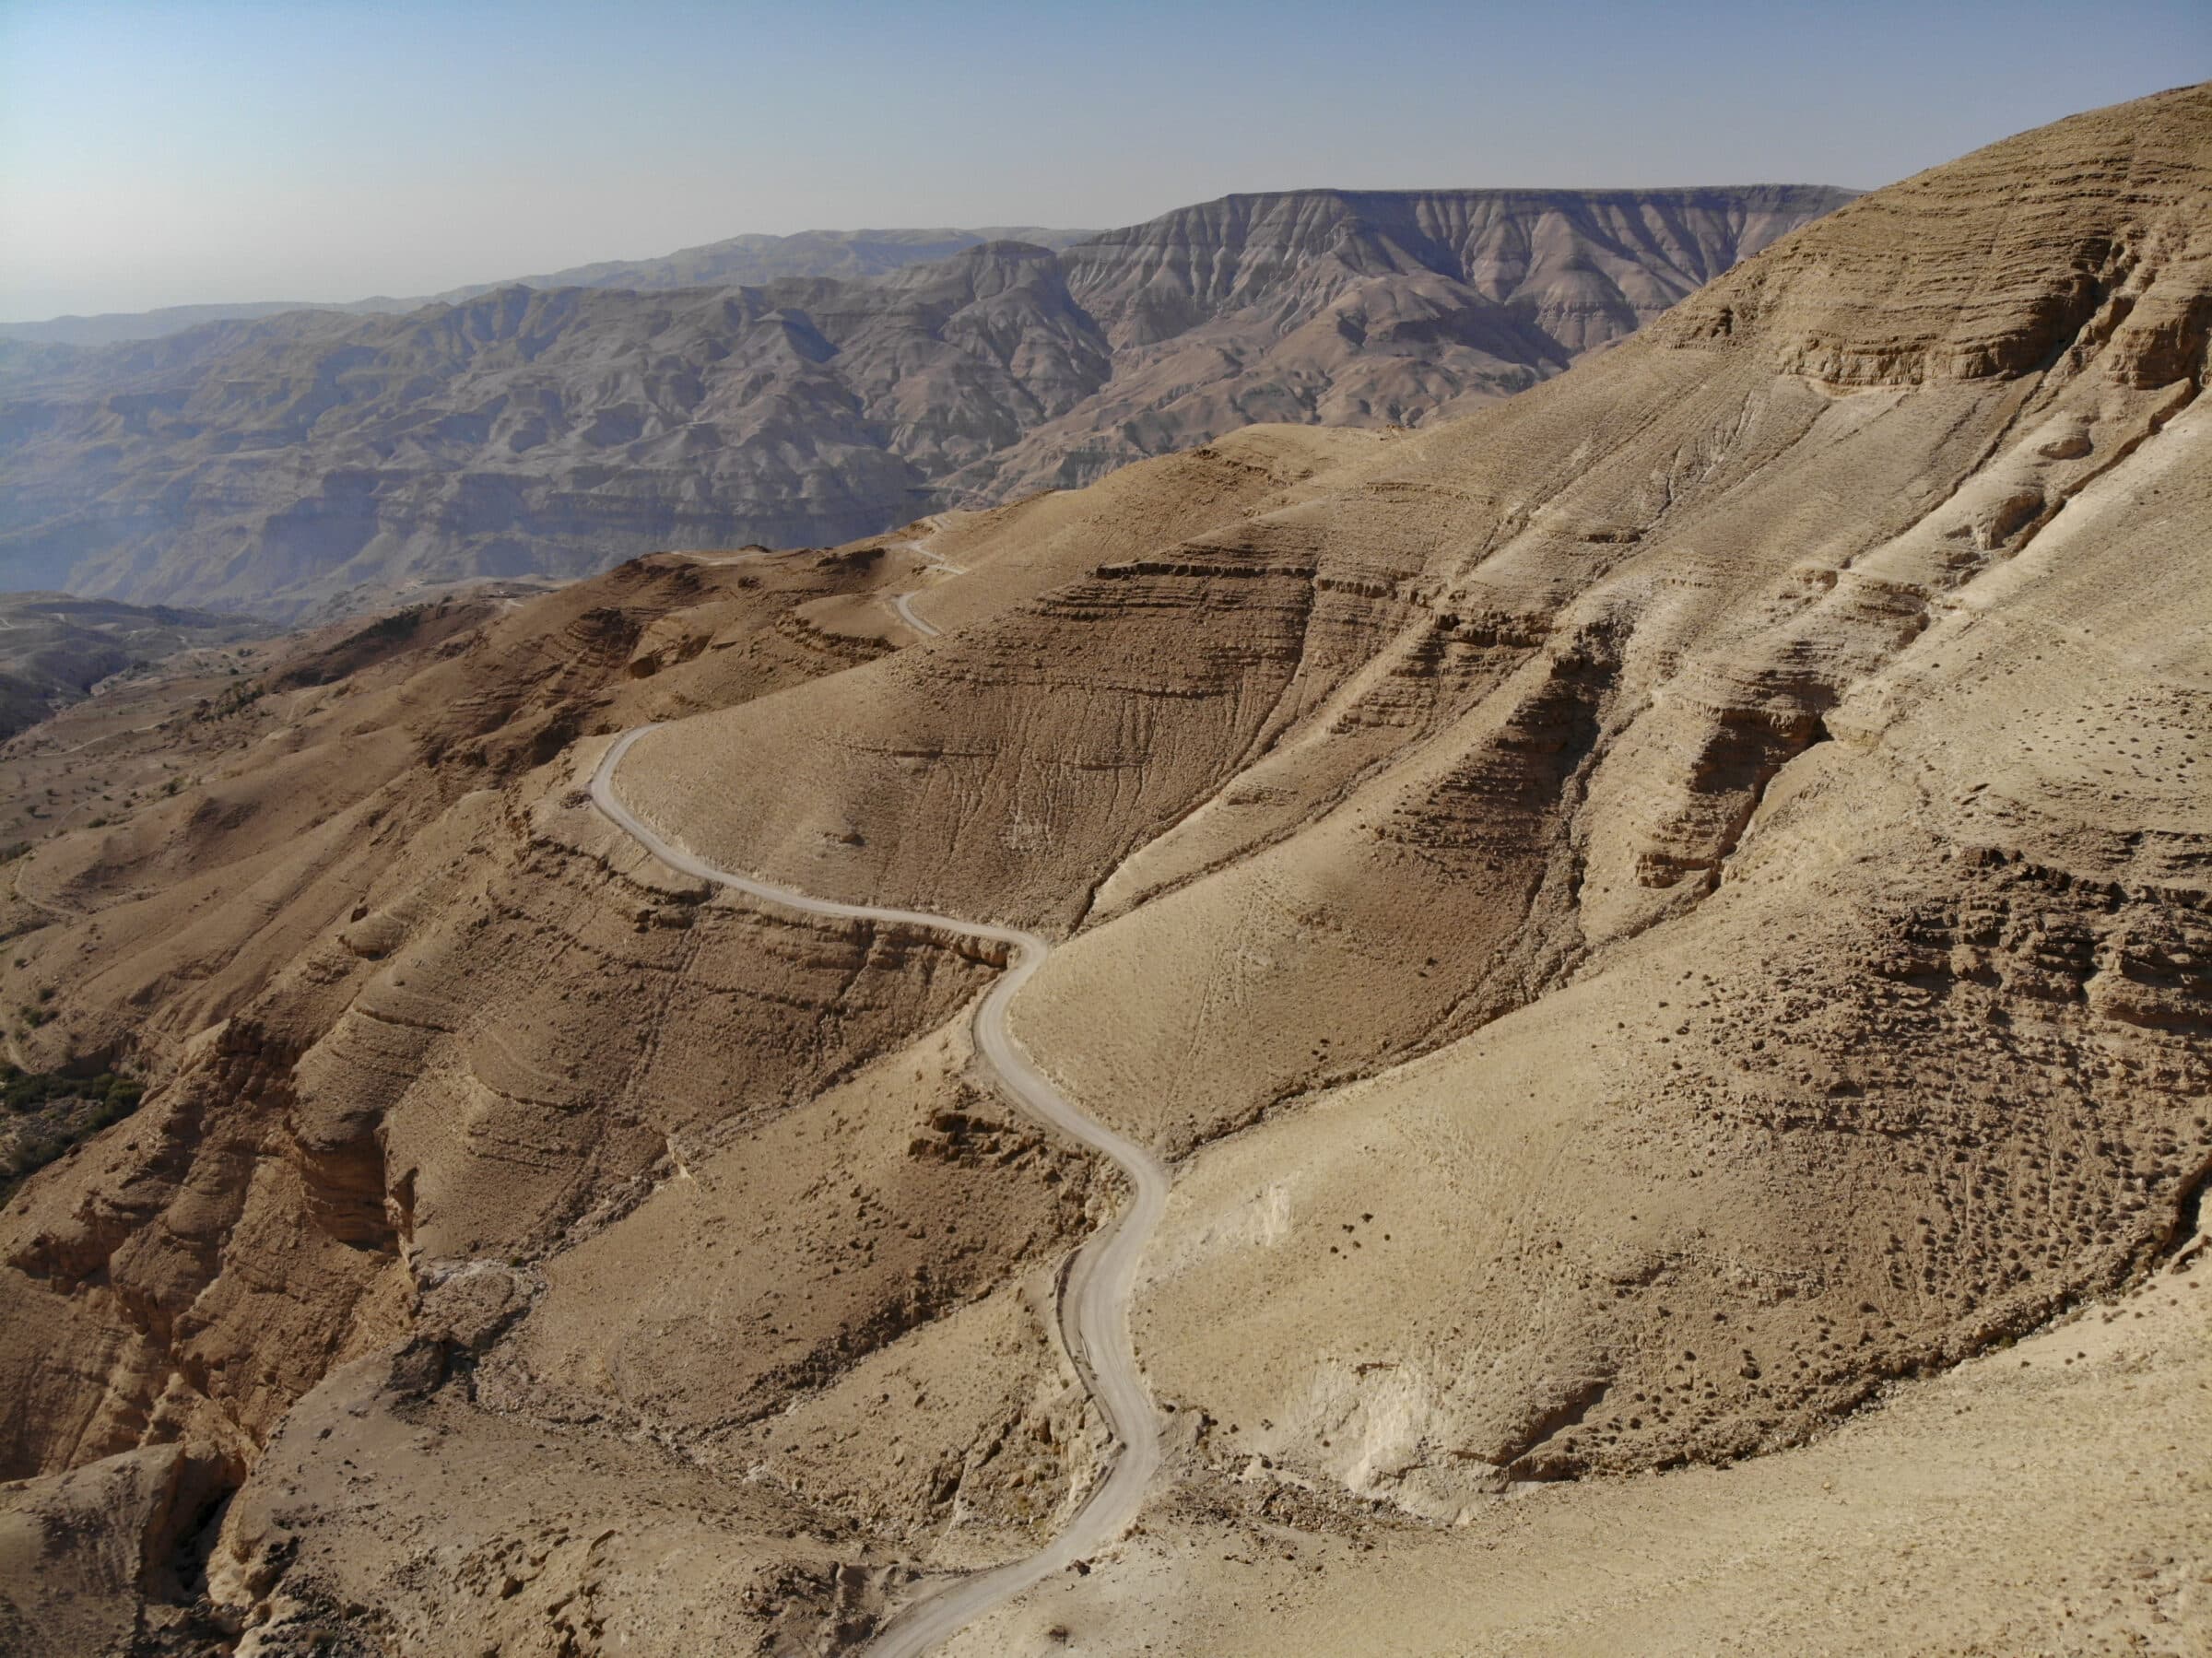 Foto de dron, tomada en Jordania